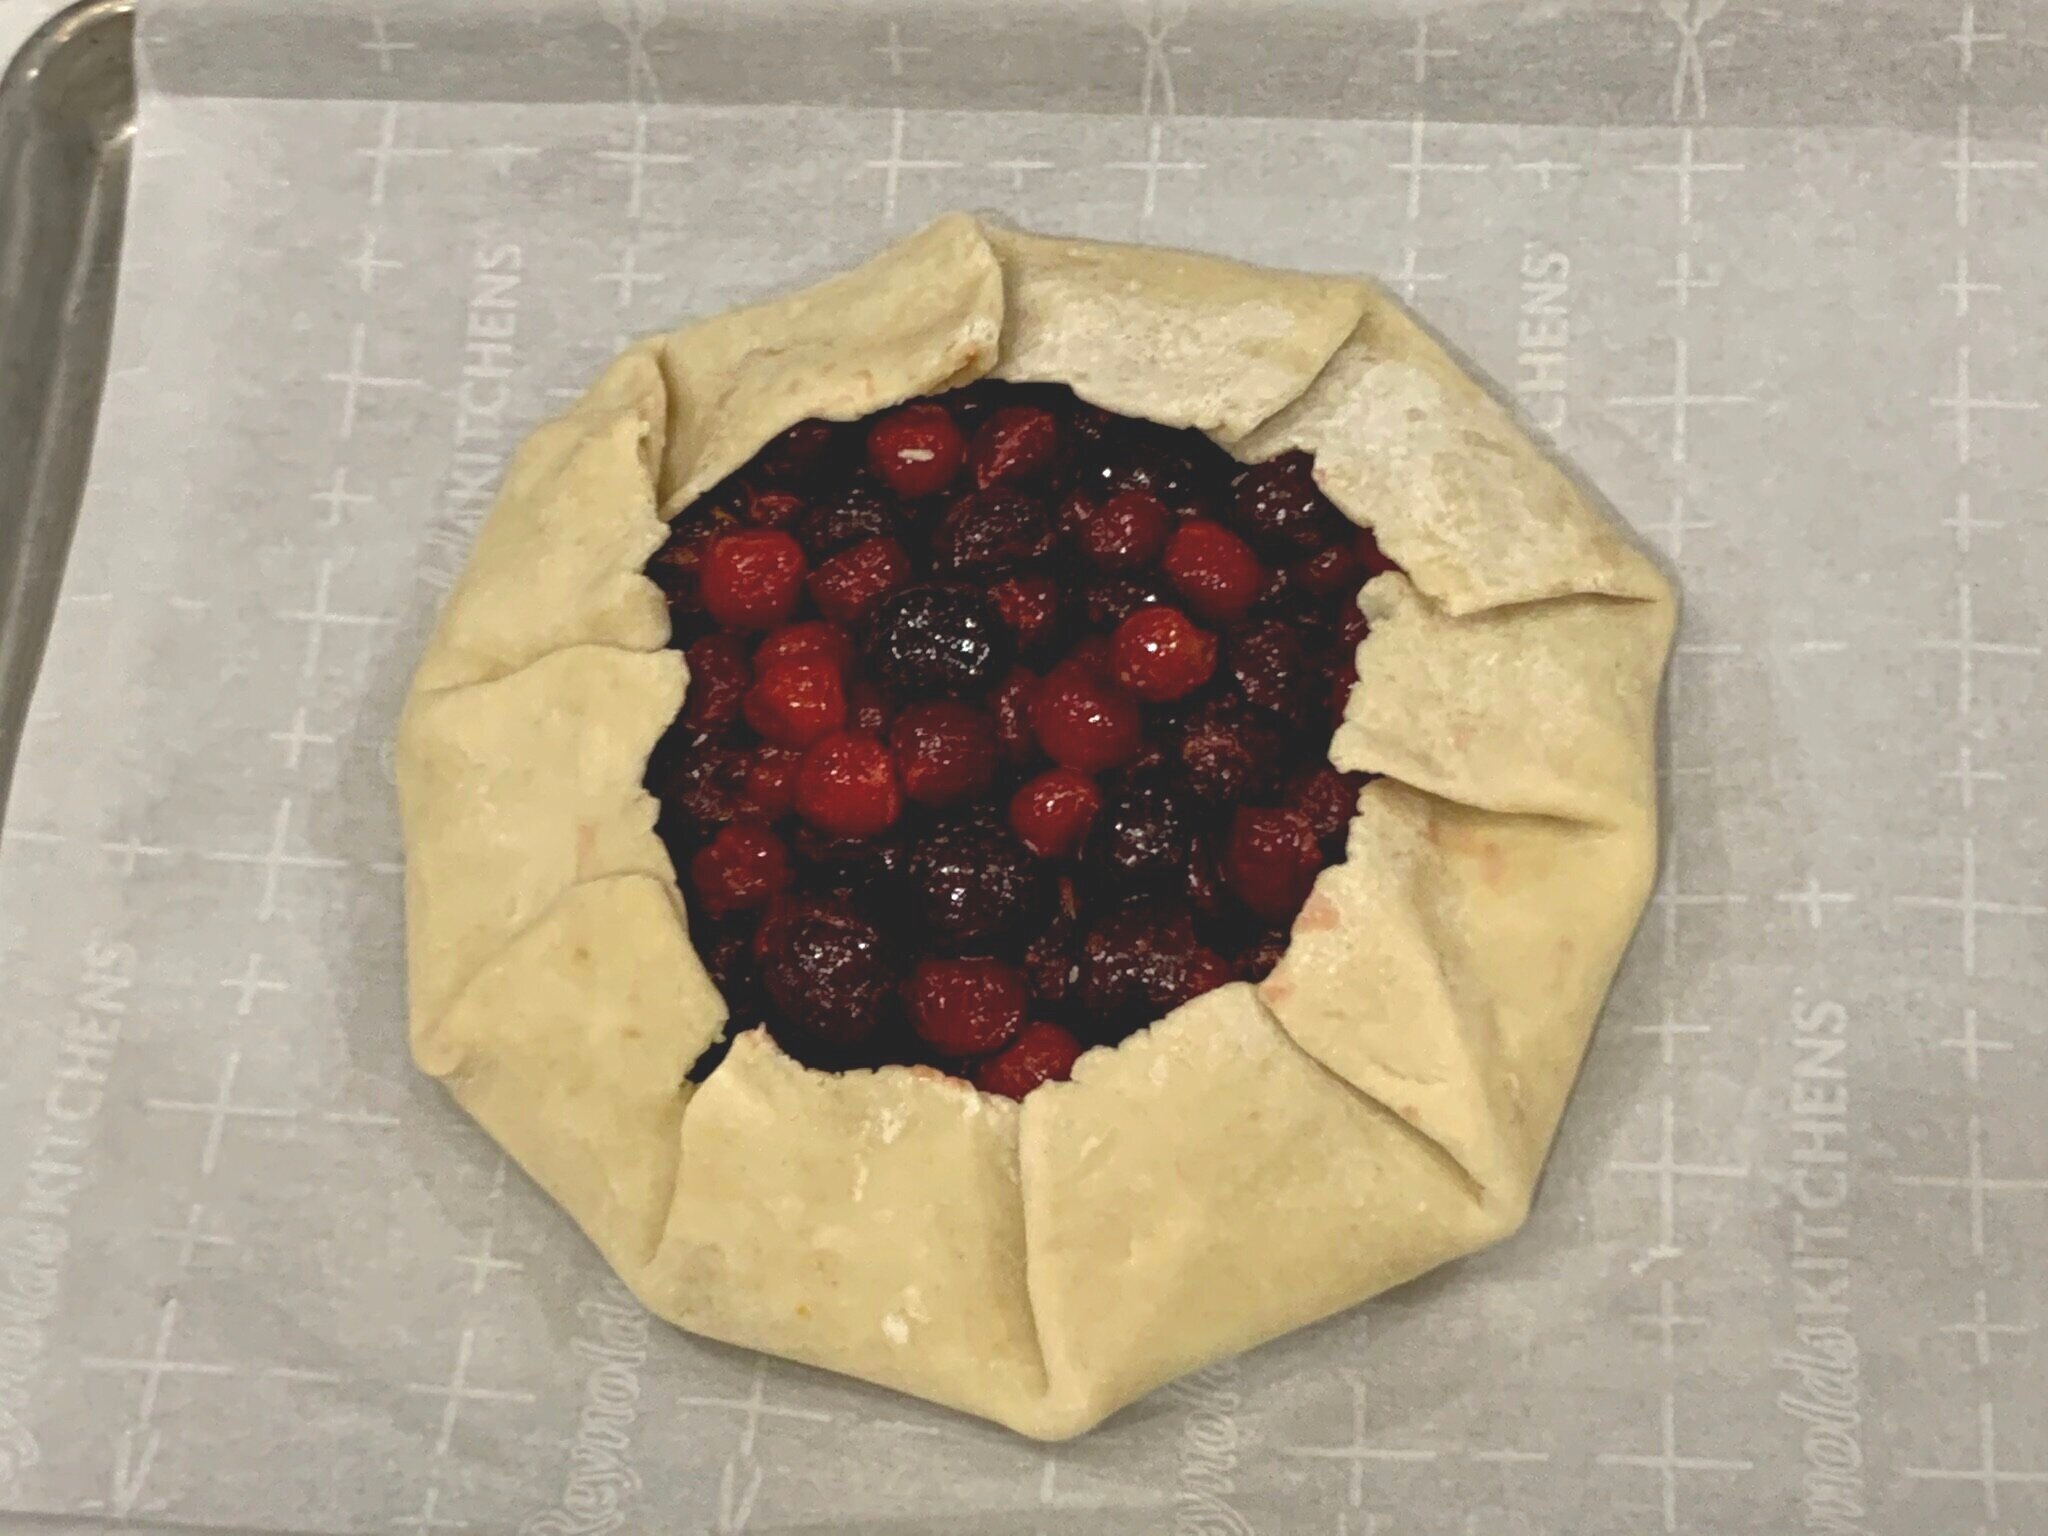 b) Fold crust over cherries.